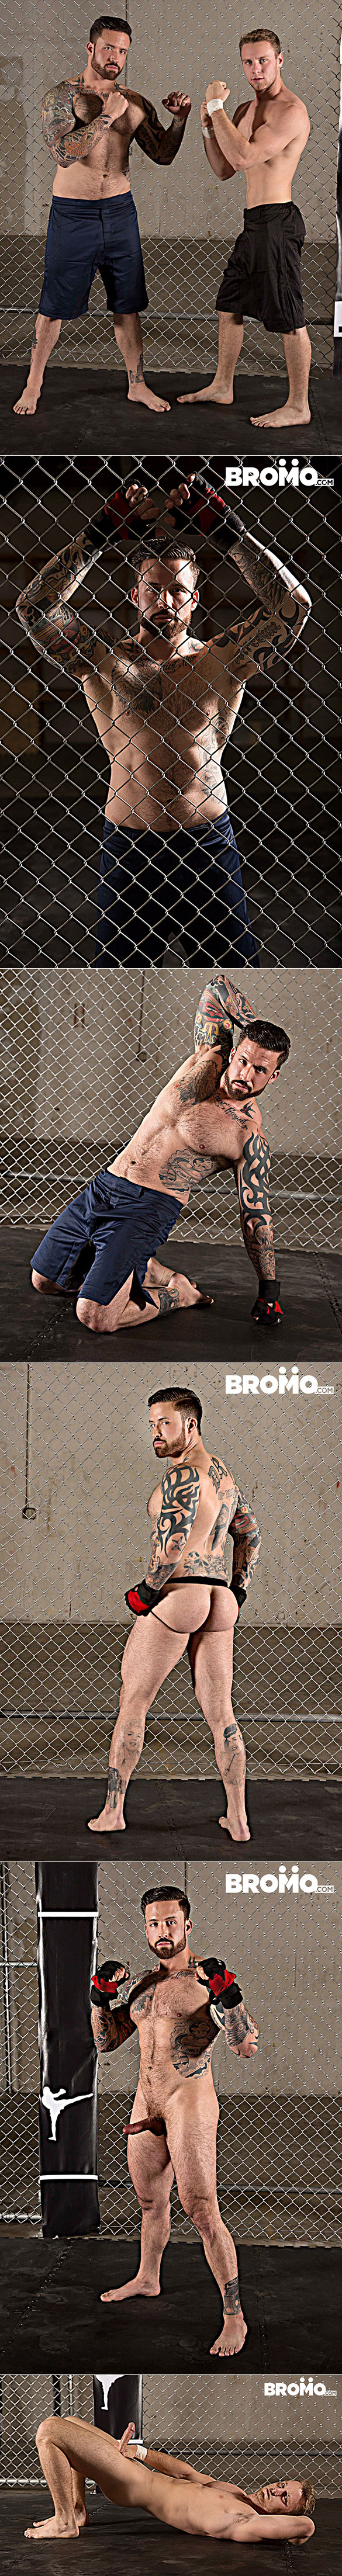 Bromo: Jordan Levine pounds Brandon Evans in "Submission, Part 3"